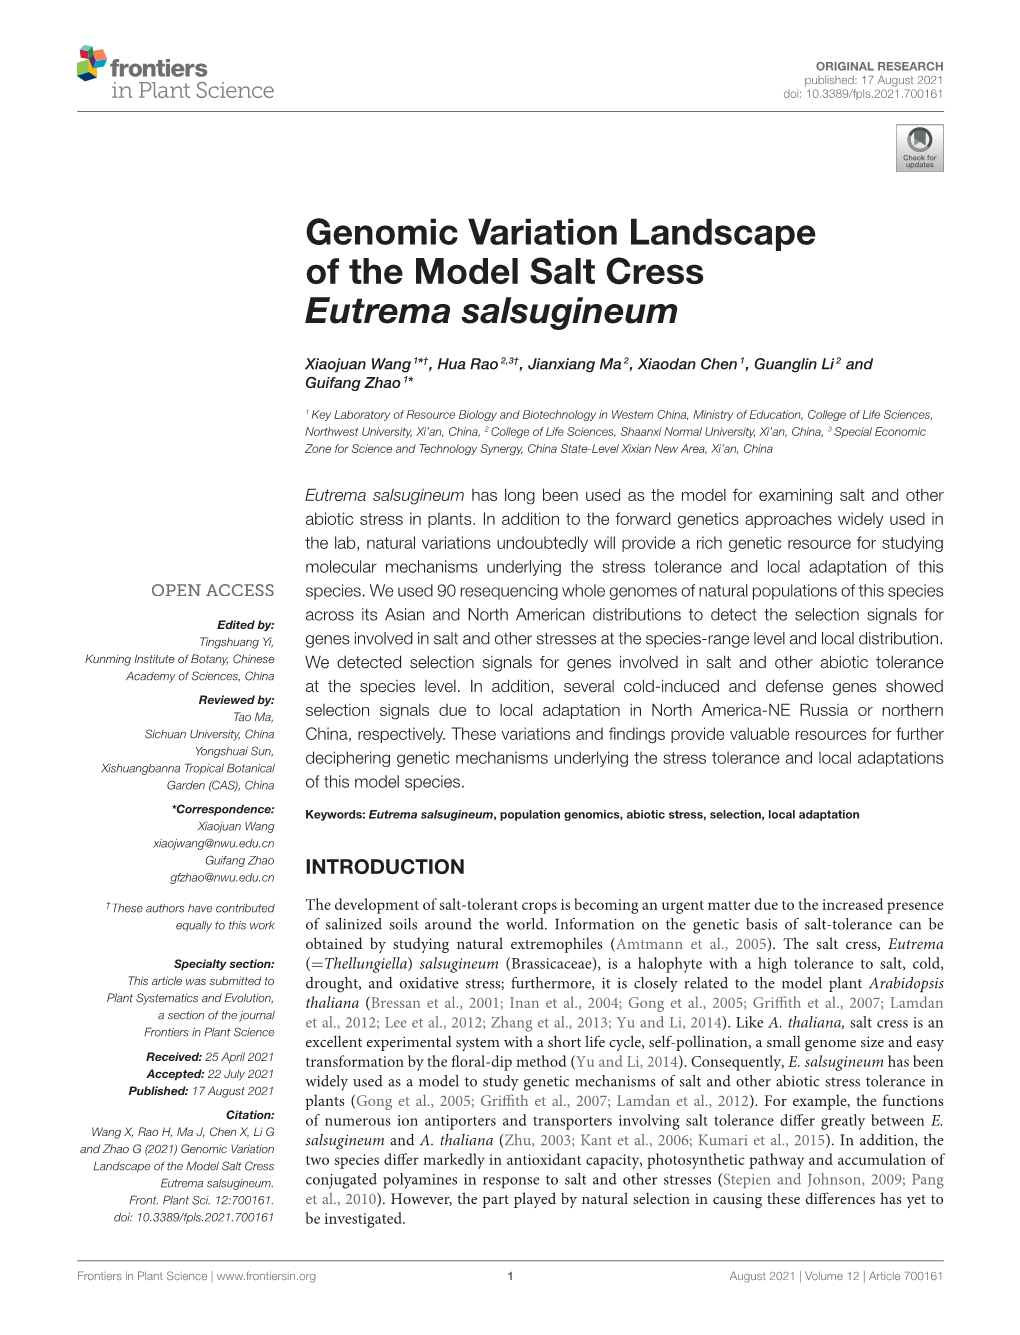 Genomic Variation Landscape of the Model Salt Cress Eutrema Salsugineum